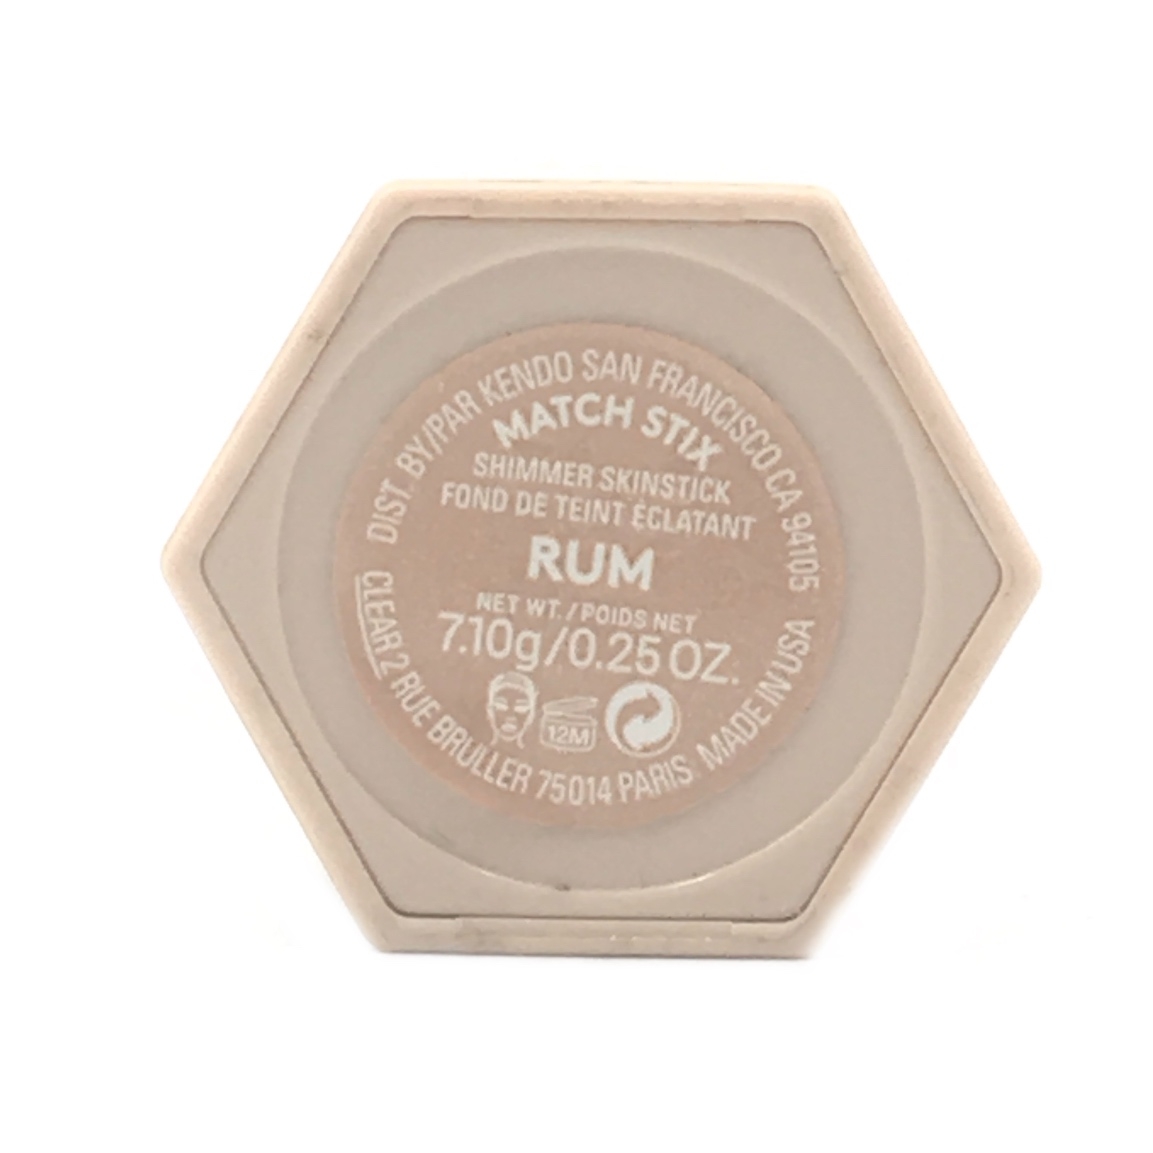 Fenty Beauty Match Stix Shimmer Skinstick Rum Faces